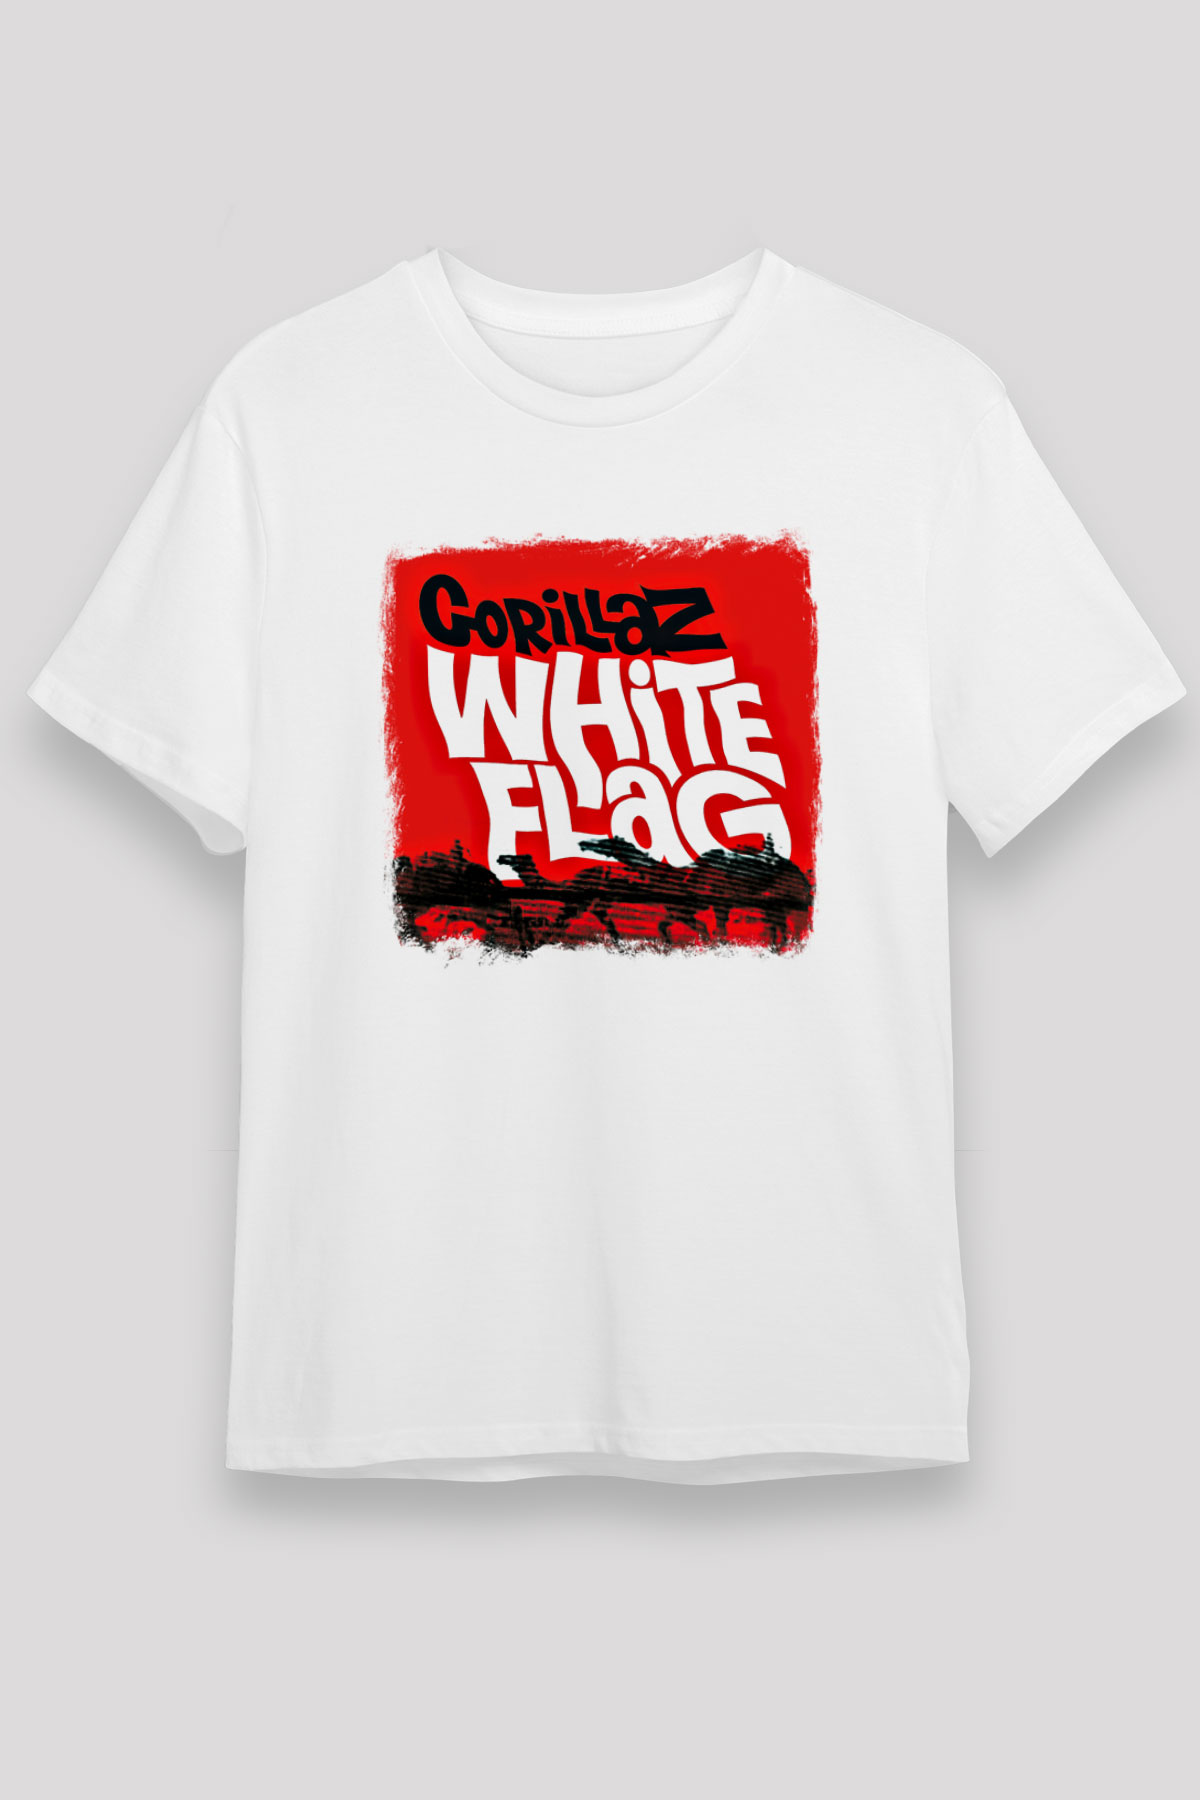 Gorillaz T shirt, Music Band ,Unisex Tshirt 05/